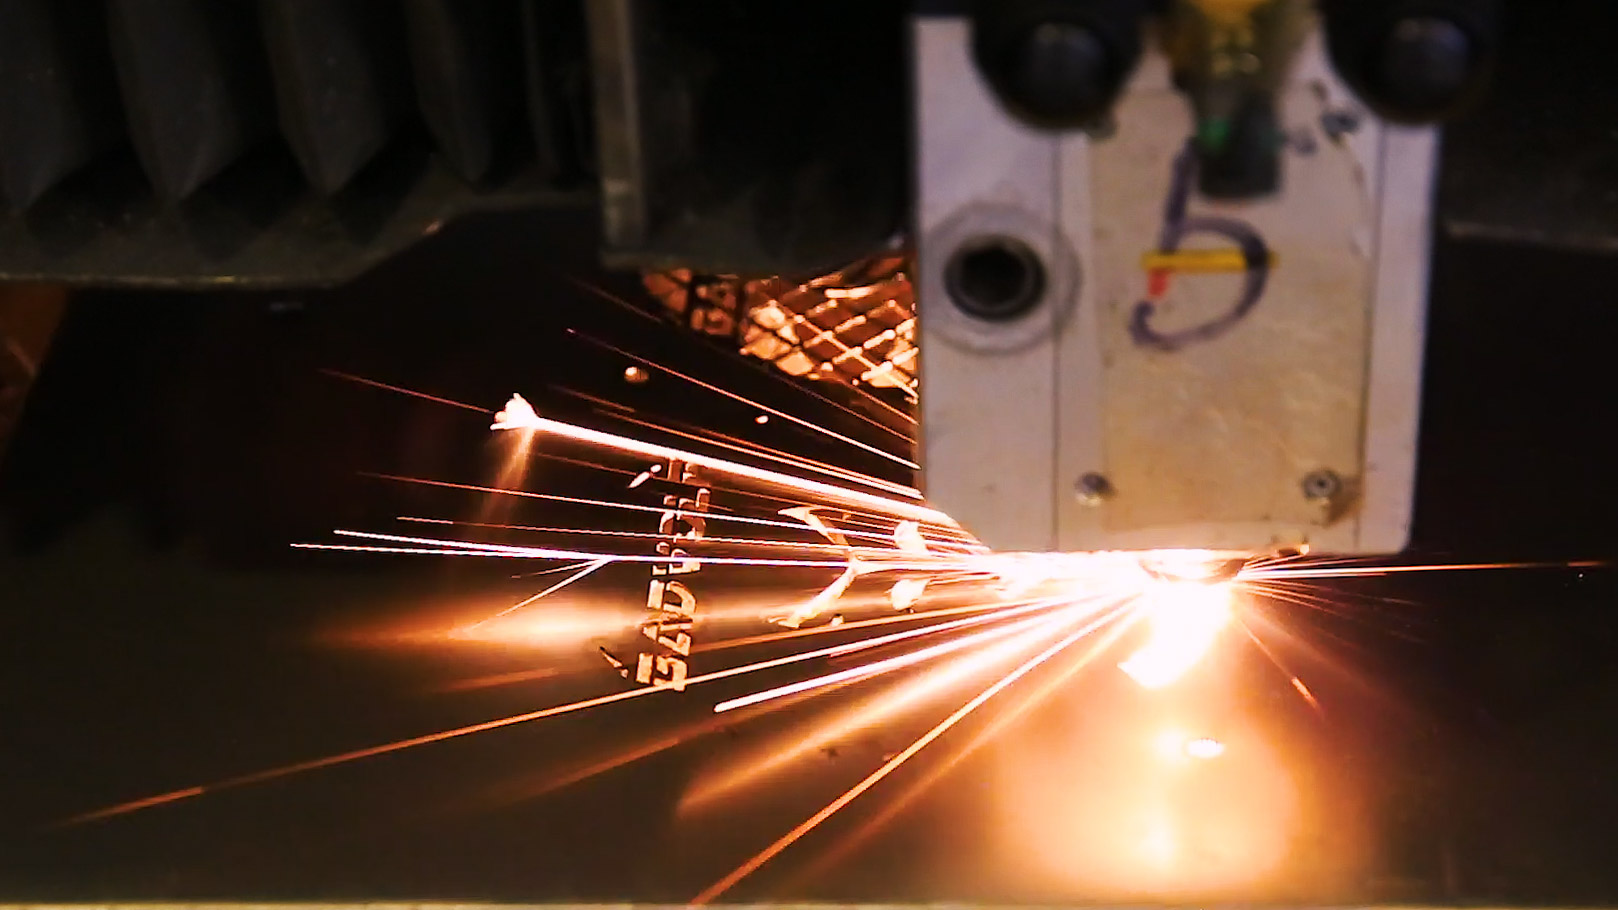 Perfolux metal fabrication, laser cutting